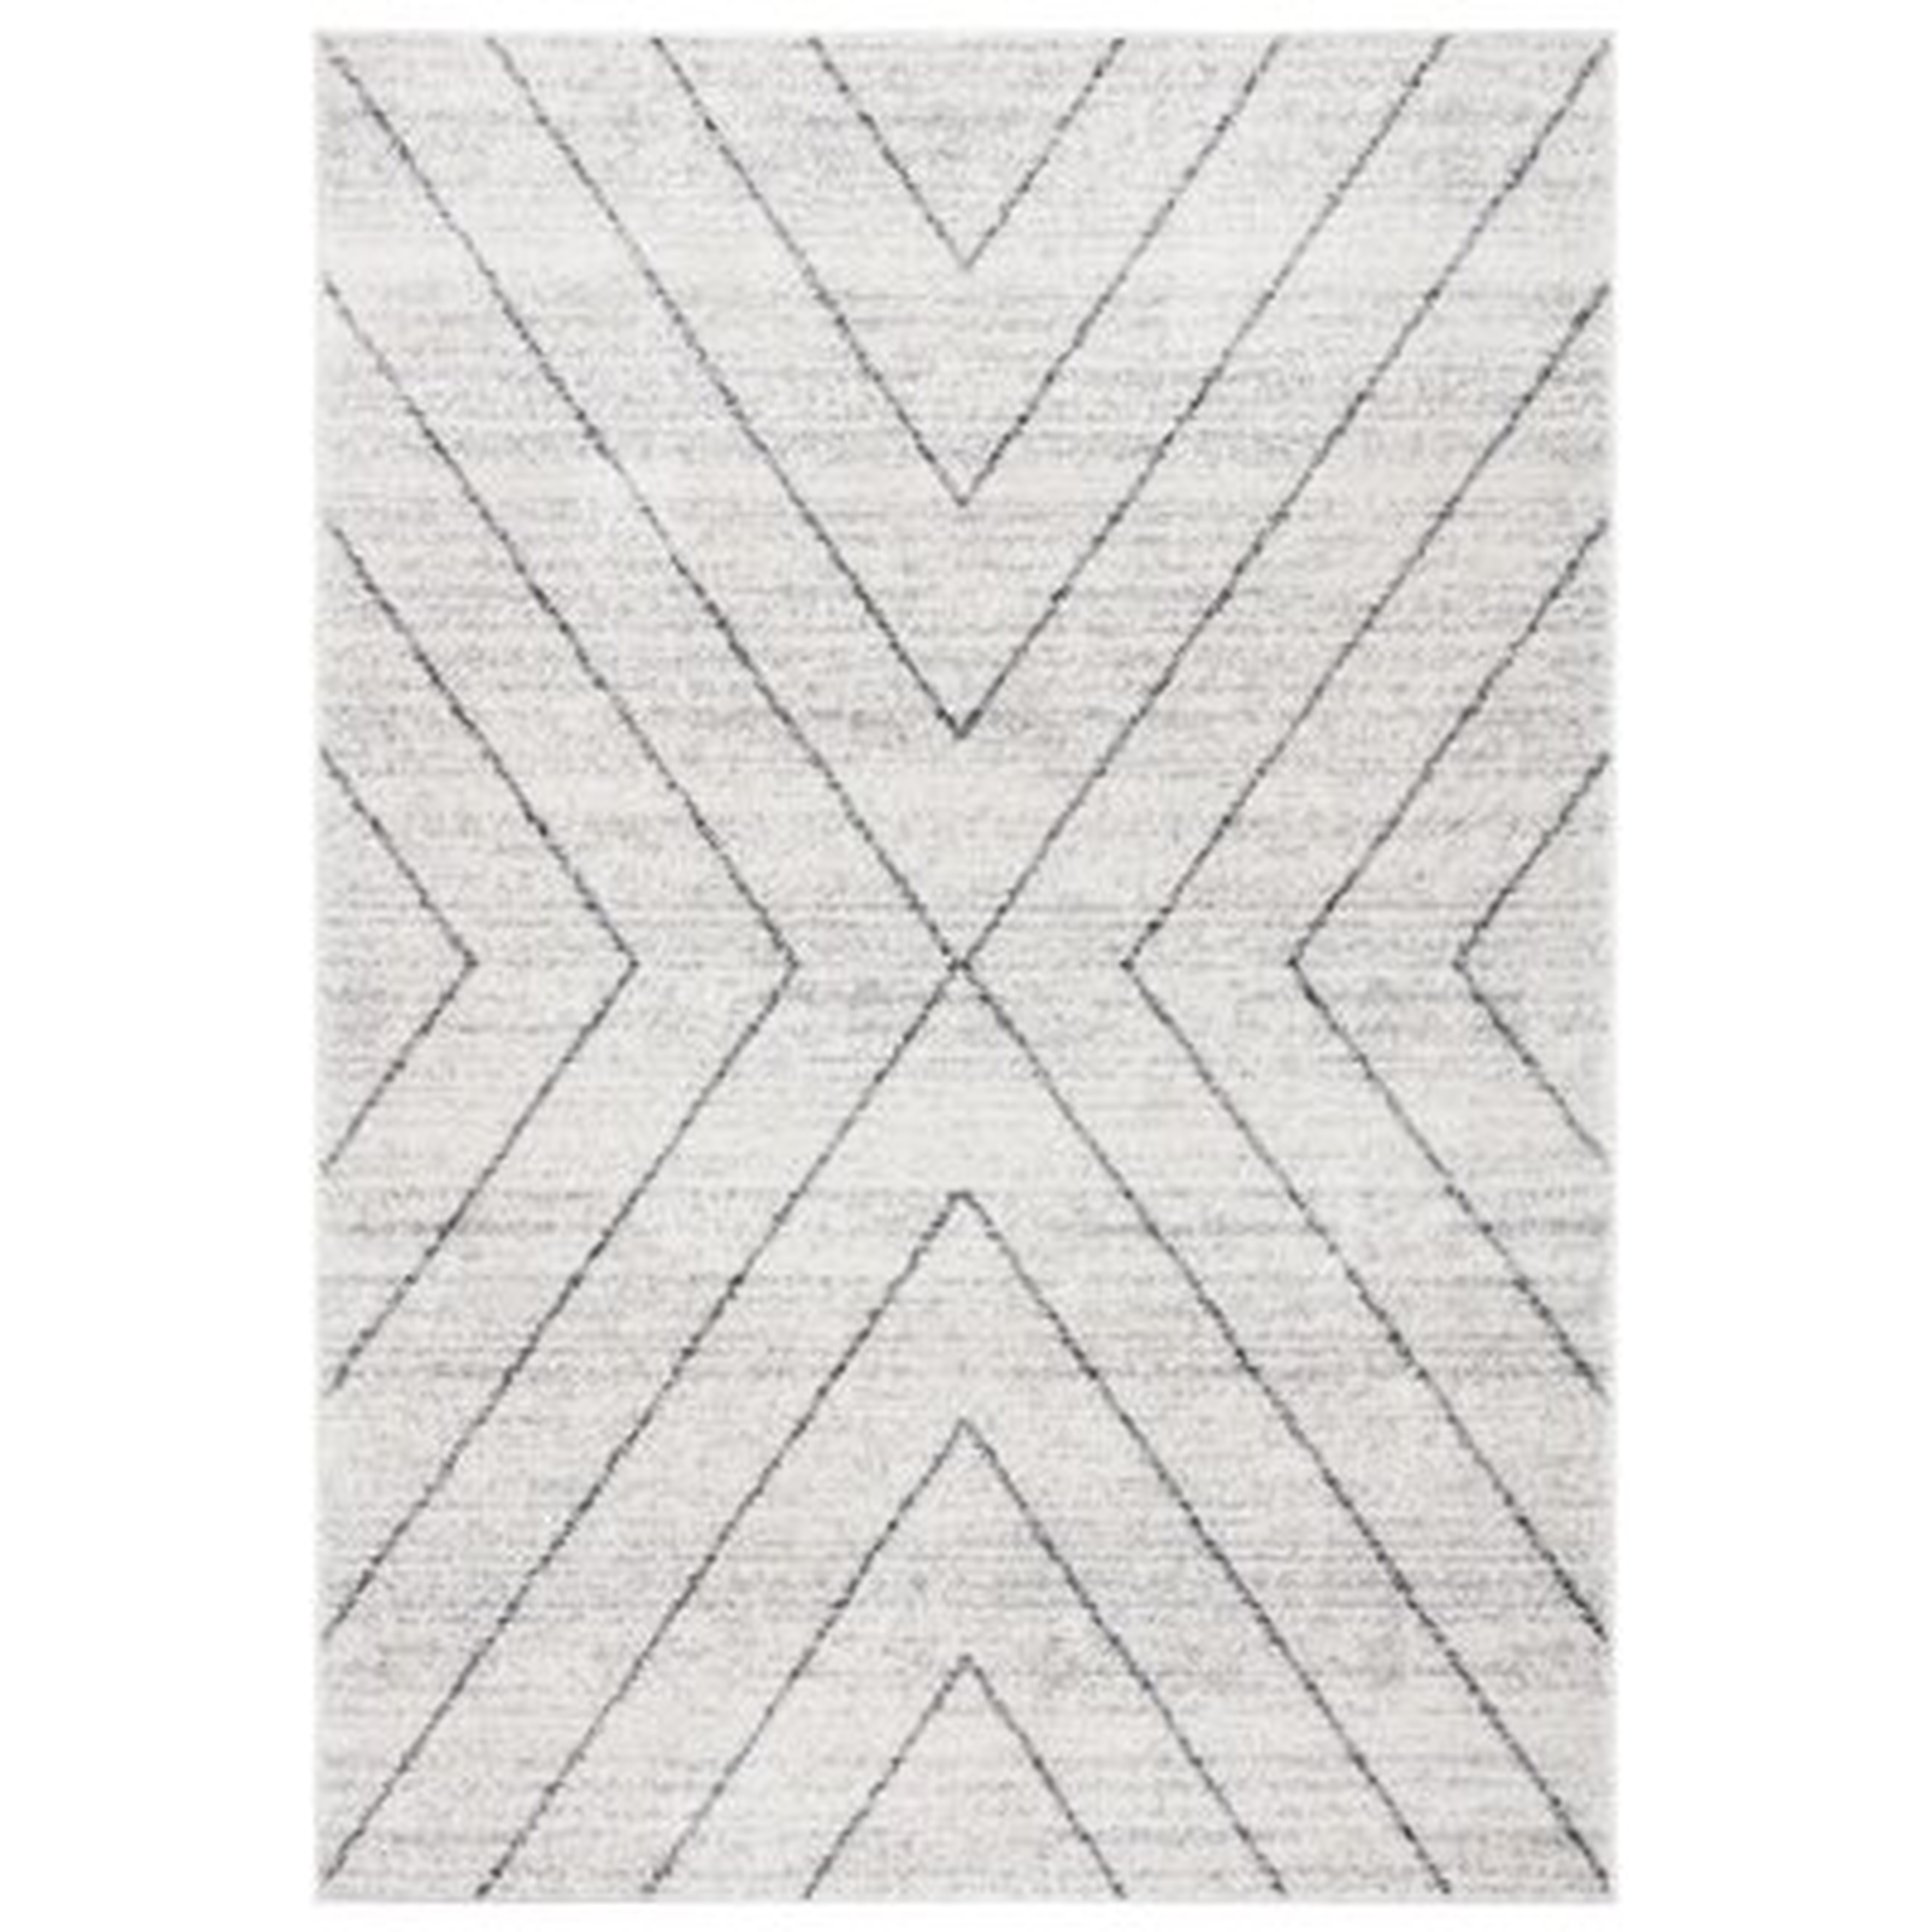 Janzen Geometric Area Rug, Ivory & Gray, 8' x 10' - Wayfair